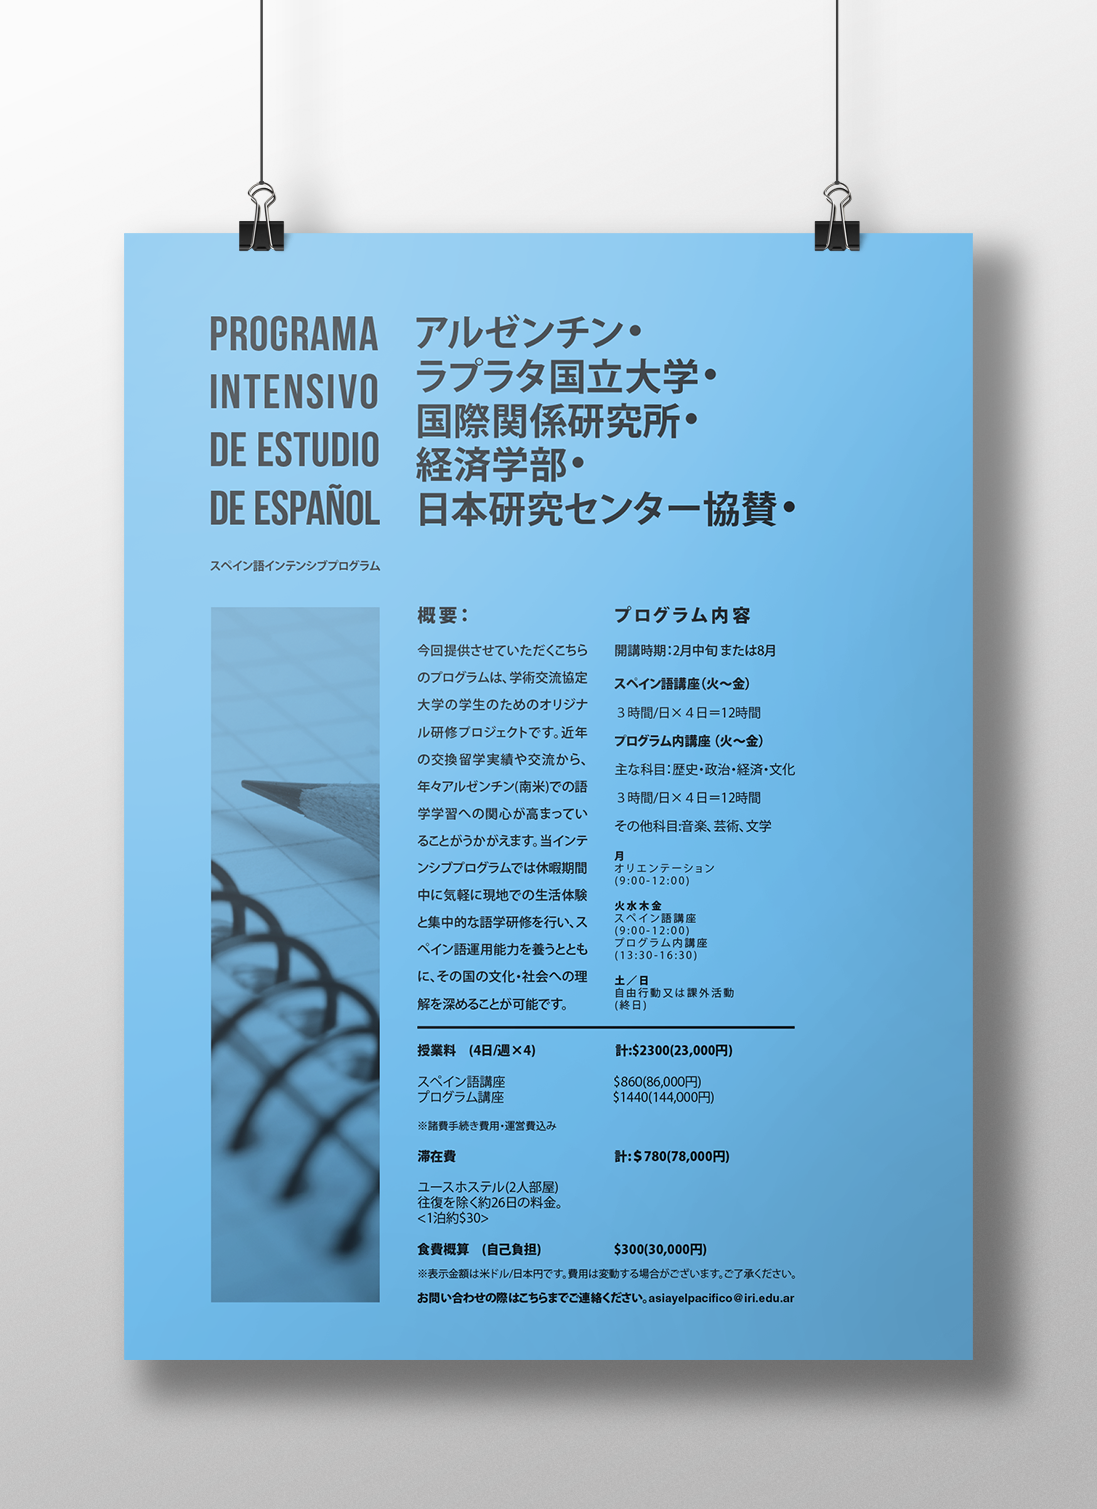 poster informative blue japan japanese spanish japones español educación